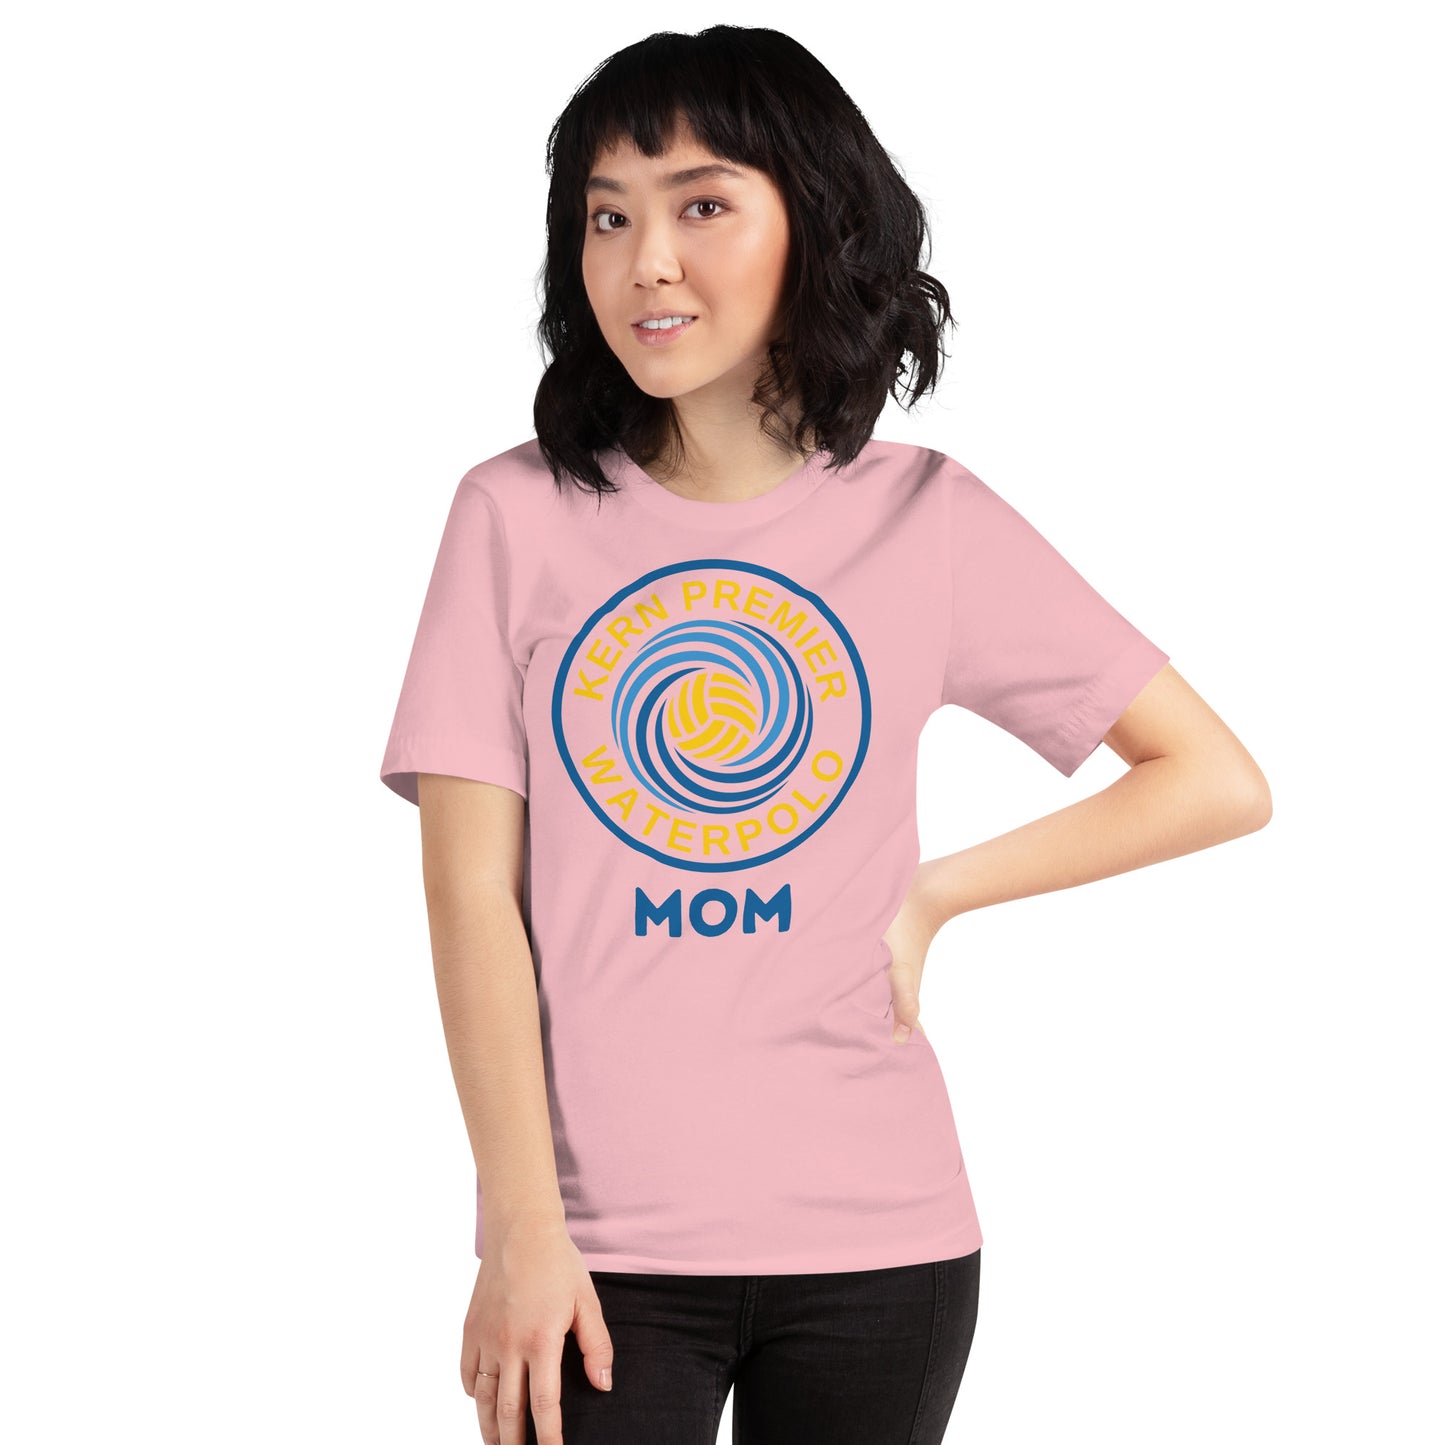 Kern Premier Mom - Circle Logo - Unisex Soft T-shirt - Bella Canvas 3001